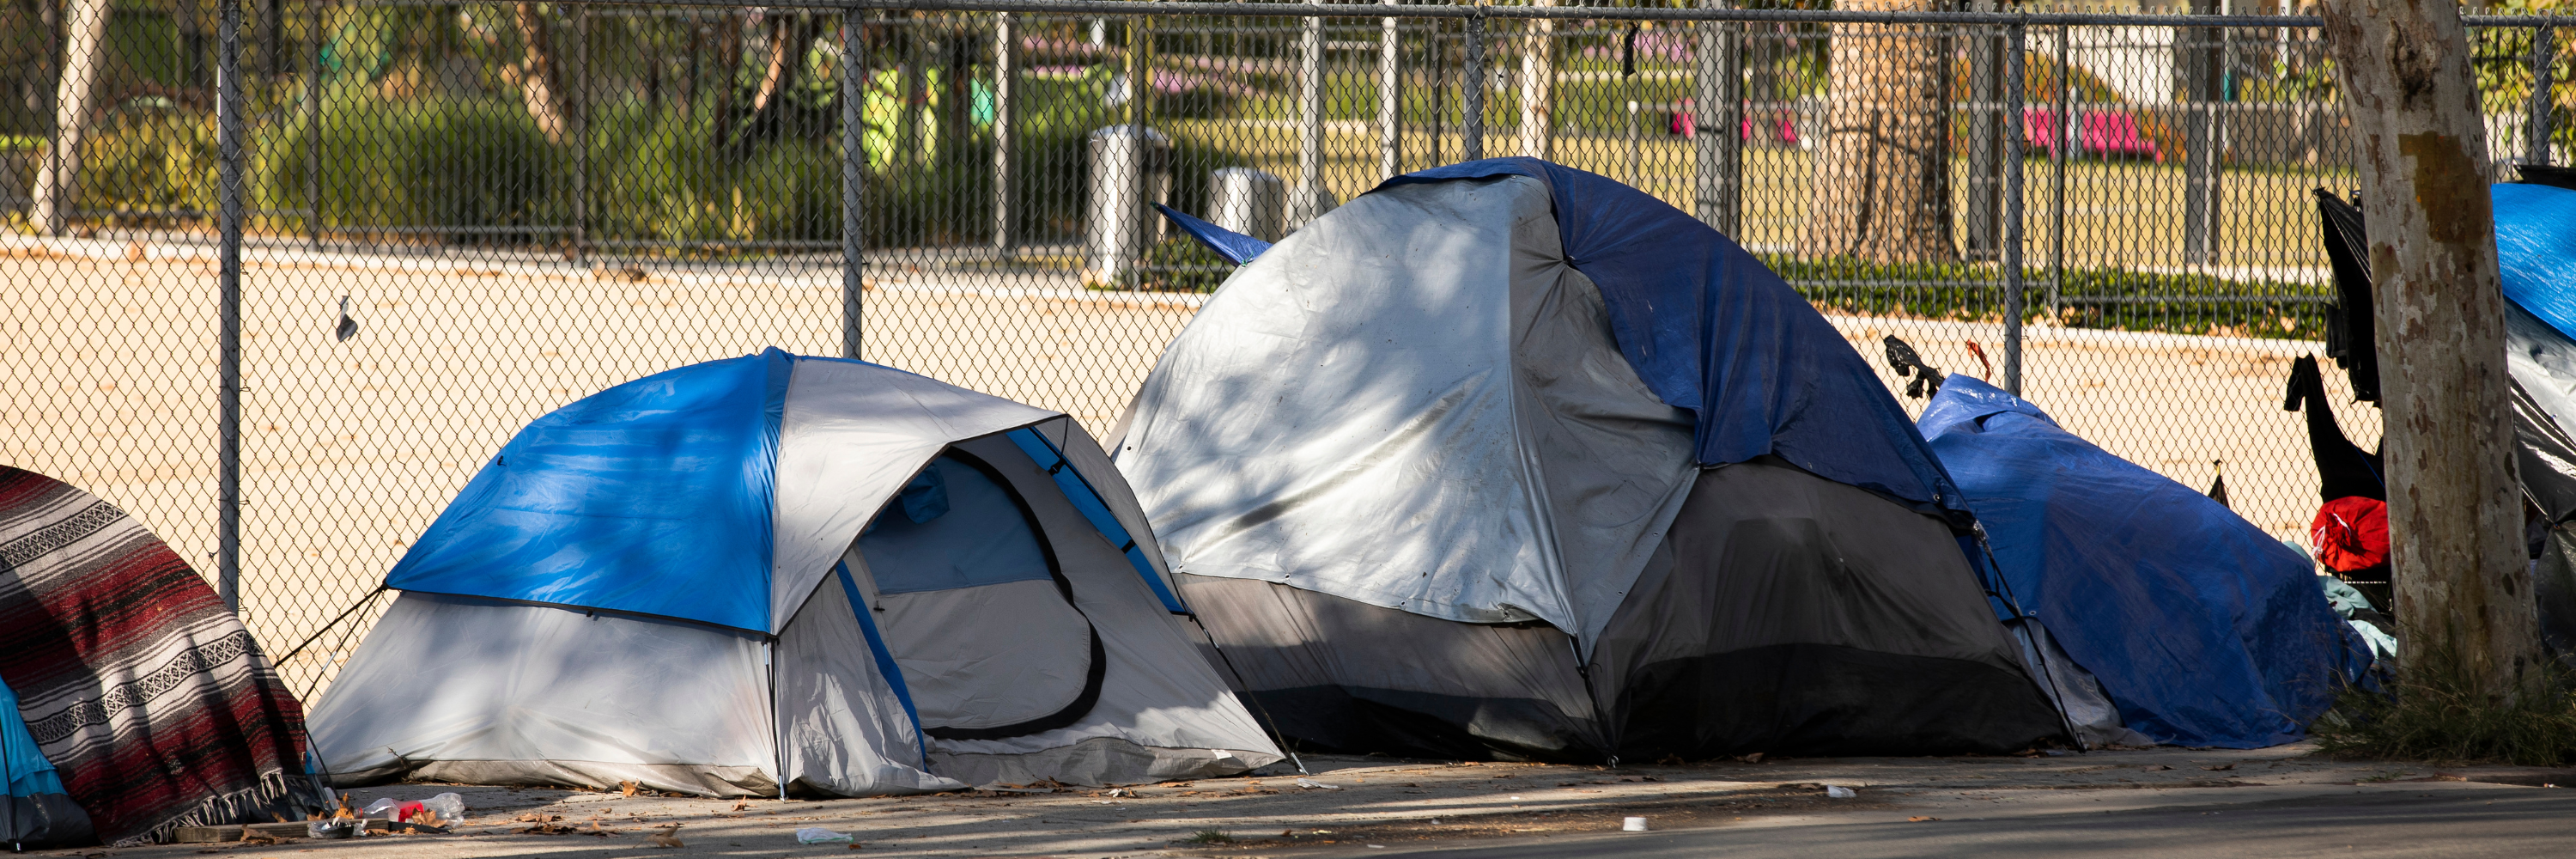 tent camp, homeless